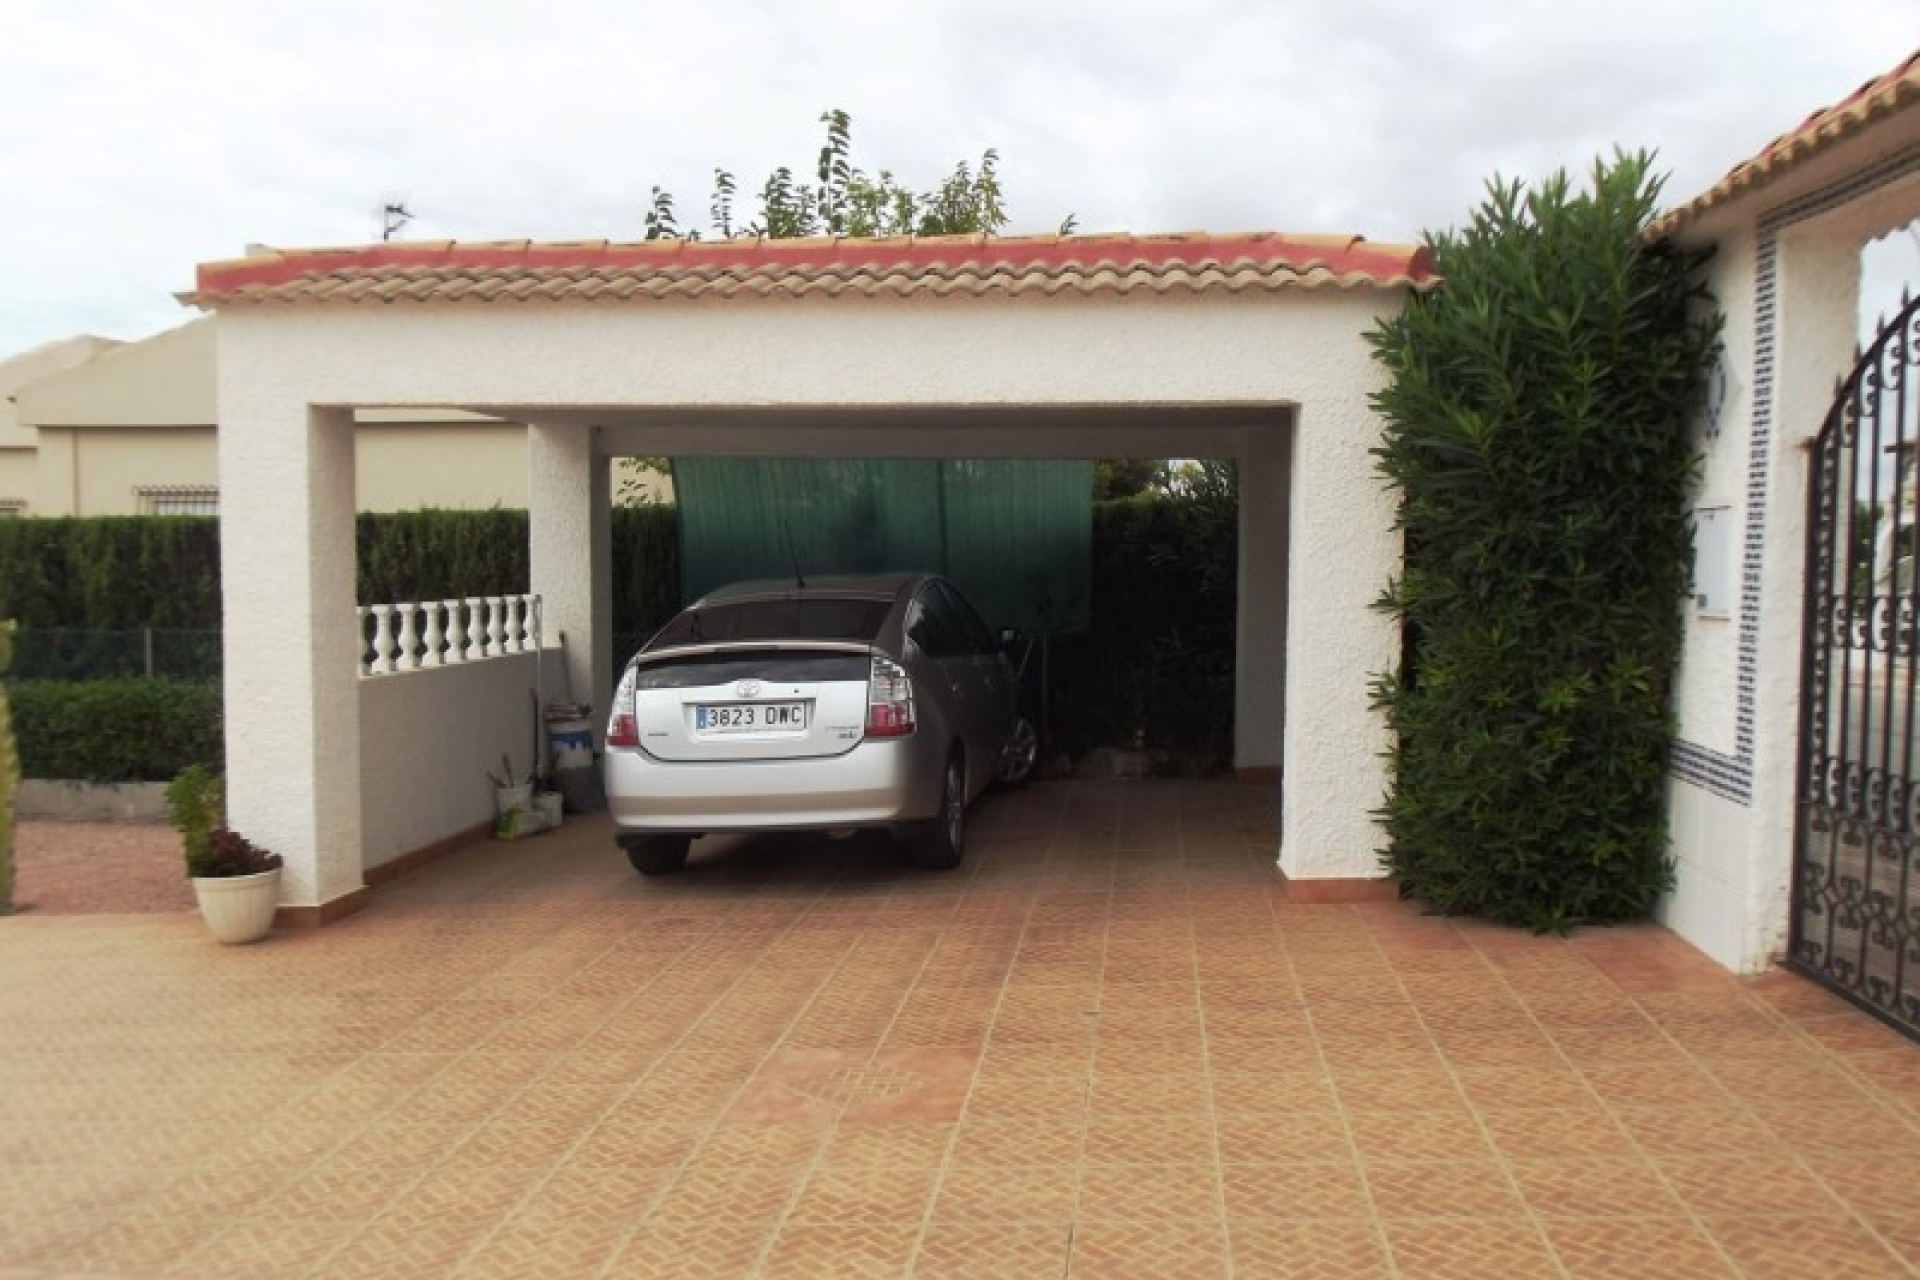 Bargain detached villa in La Siesta for sale close to Torrevieja, Spain